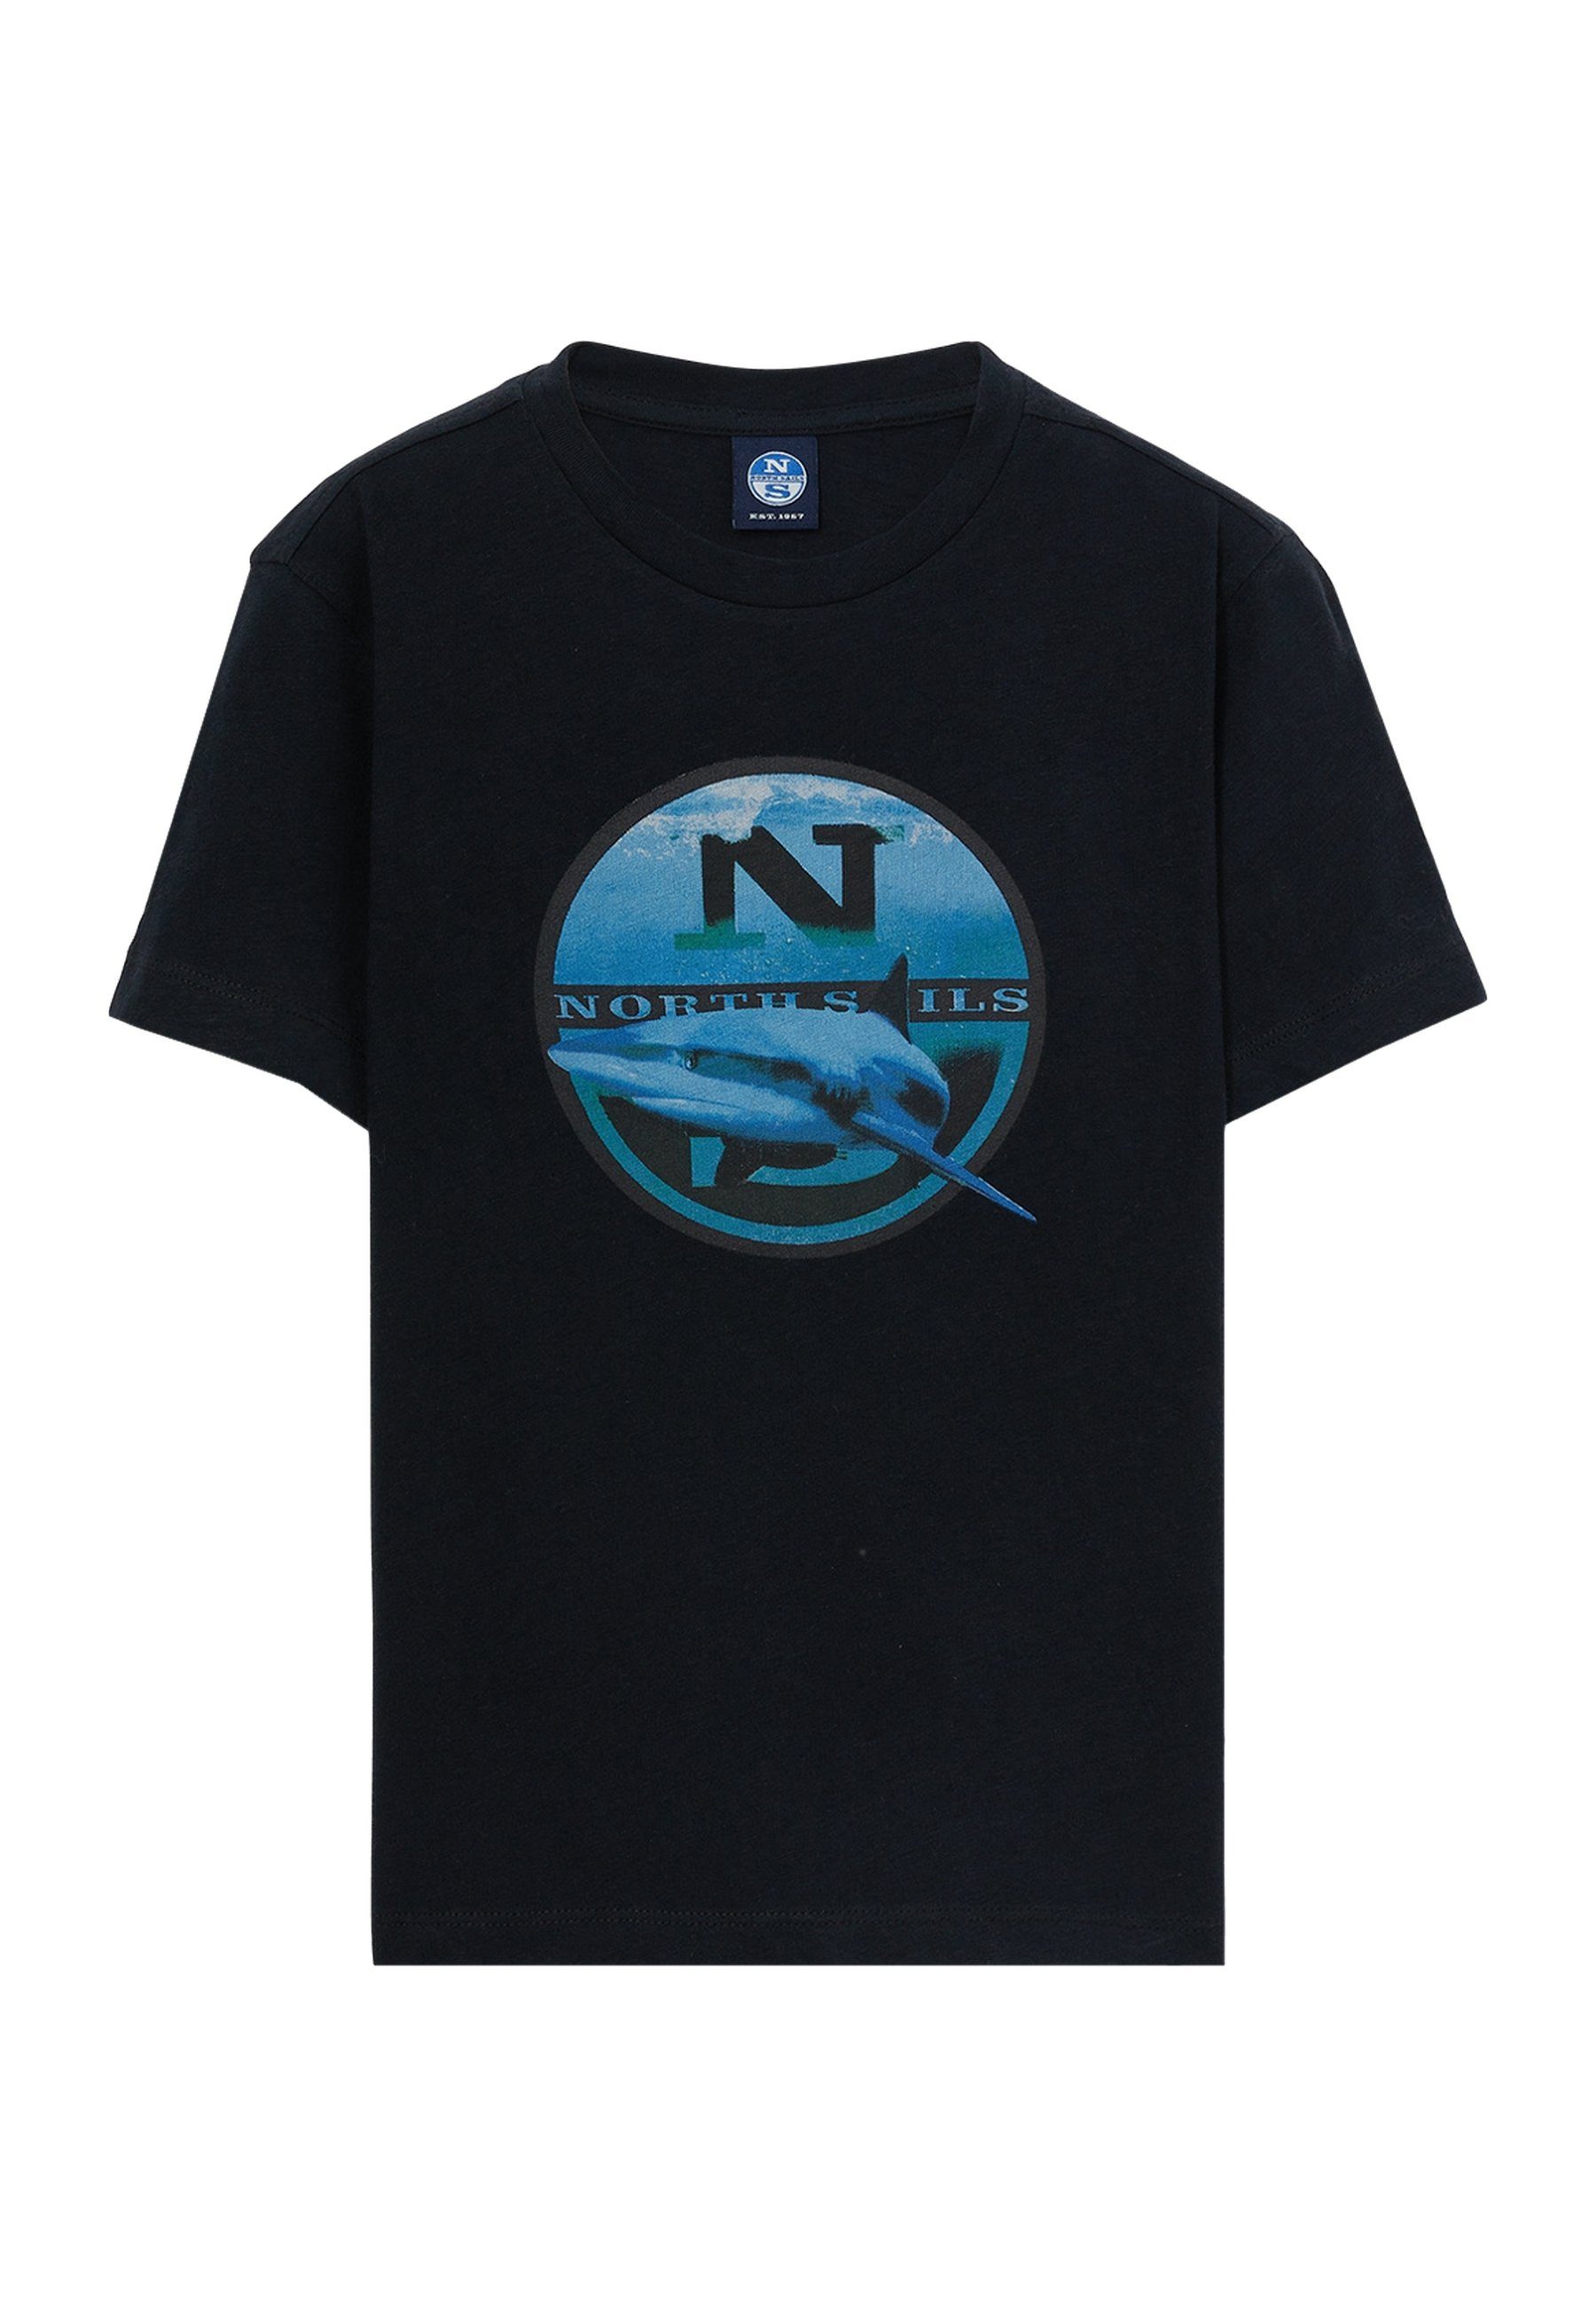 Sails North T-Shirt schwarz Baumwoll-Bambus-T-Shirt